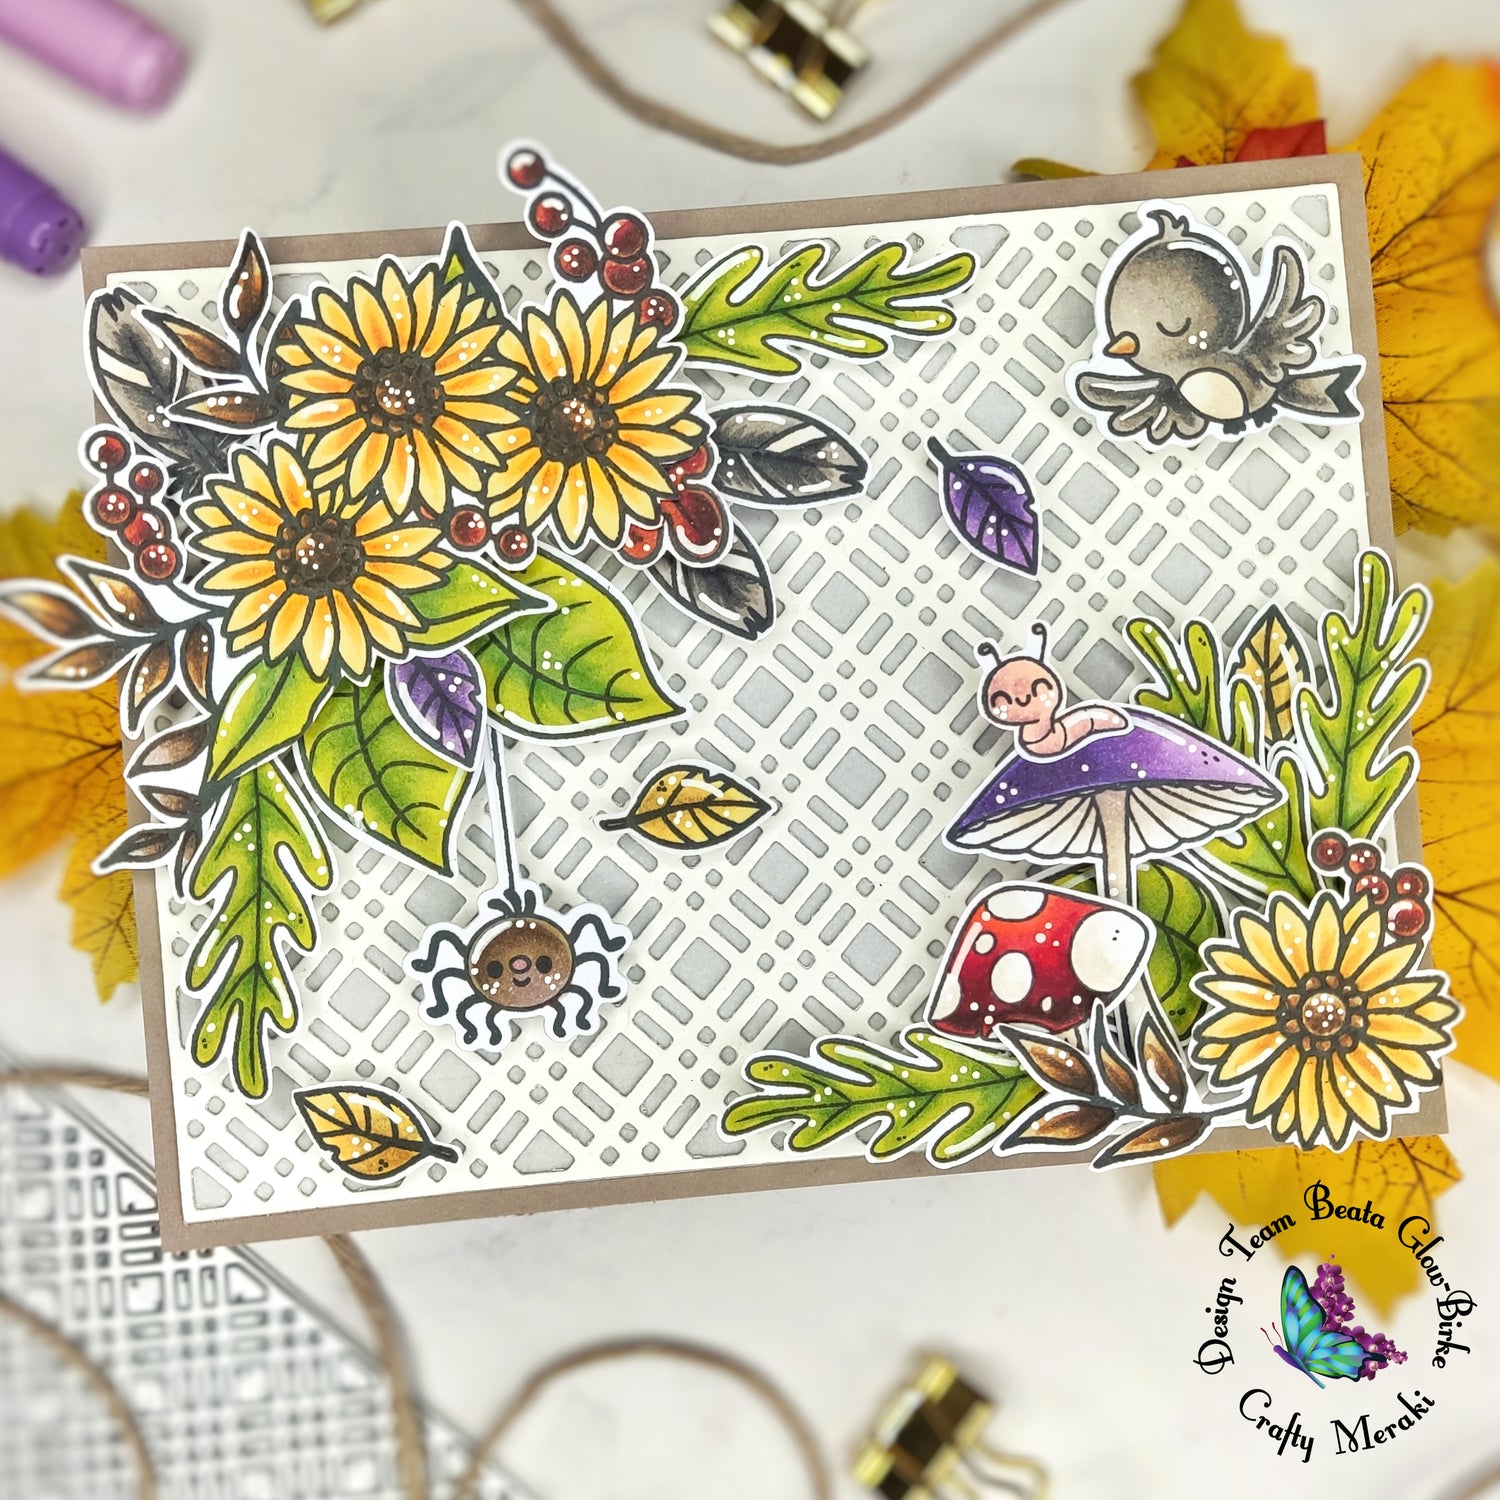 Autumn card using "Spring Wonder" elements